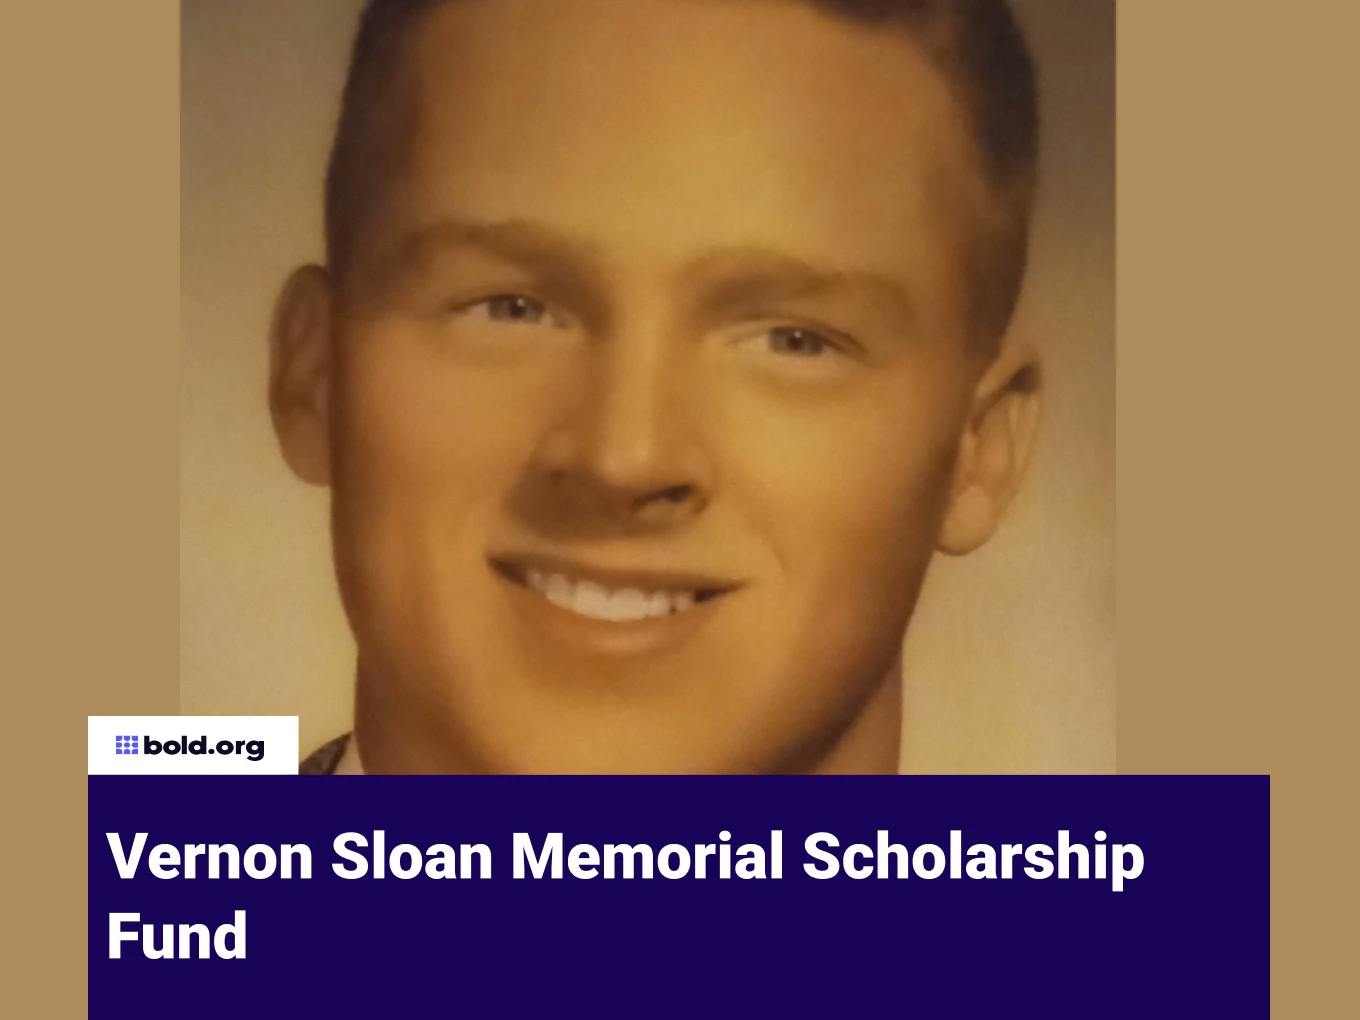 Vernon Sloan Memorial Scholarship Fund